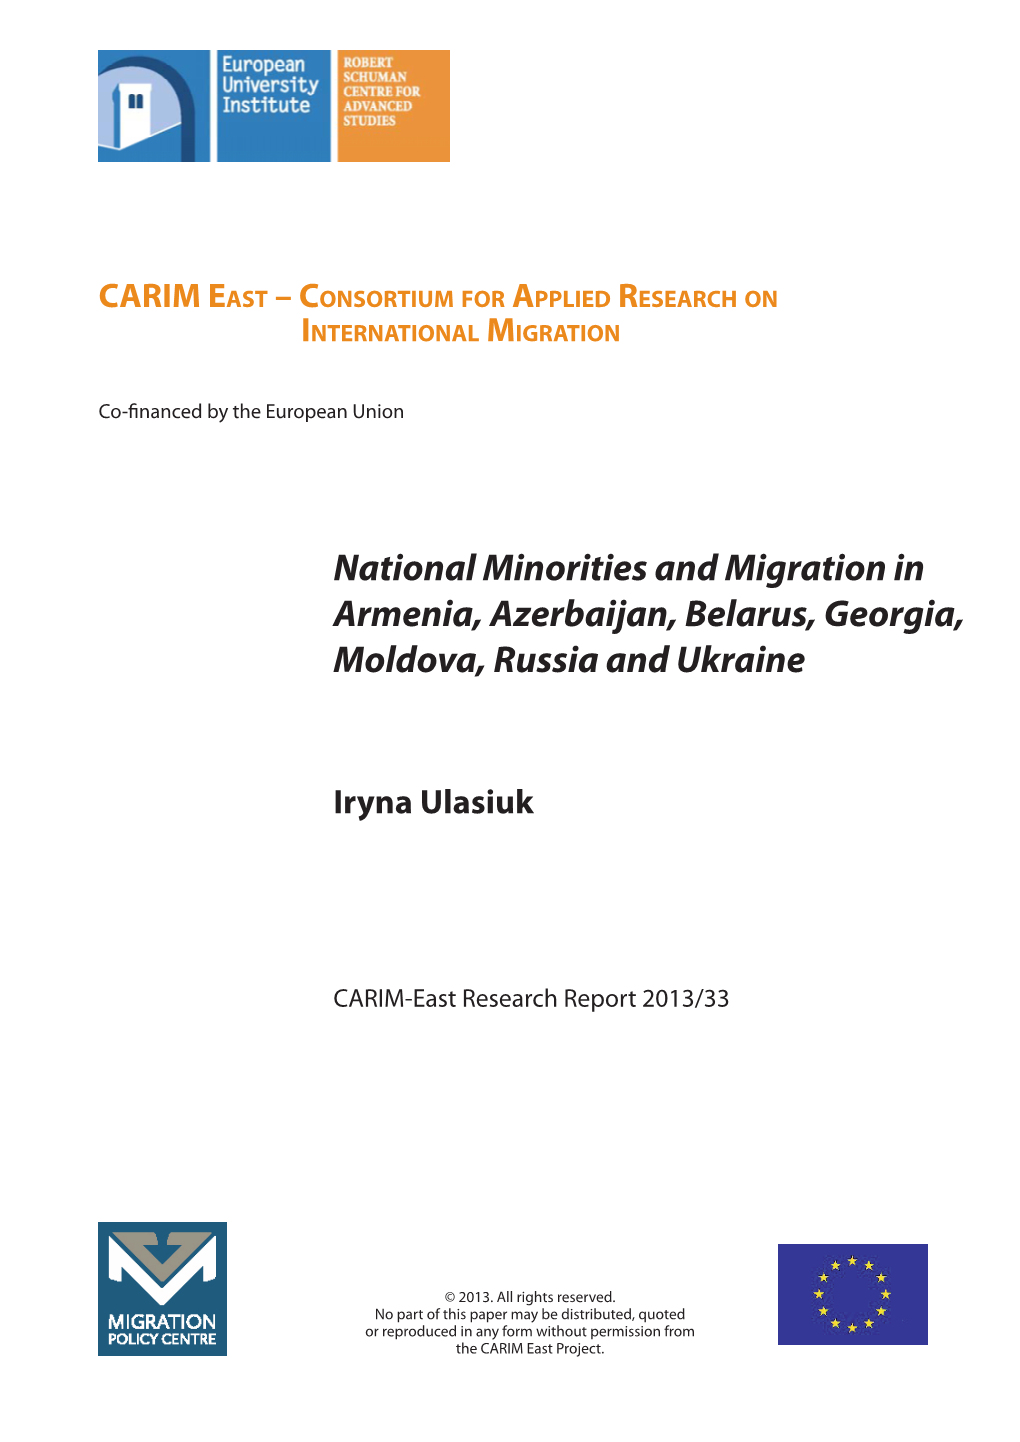 National Minorities and Migration in Armenia, Azerbaijan, Belarus, Georgia, Moldova, Russia and Ukraine